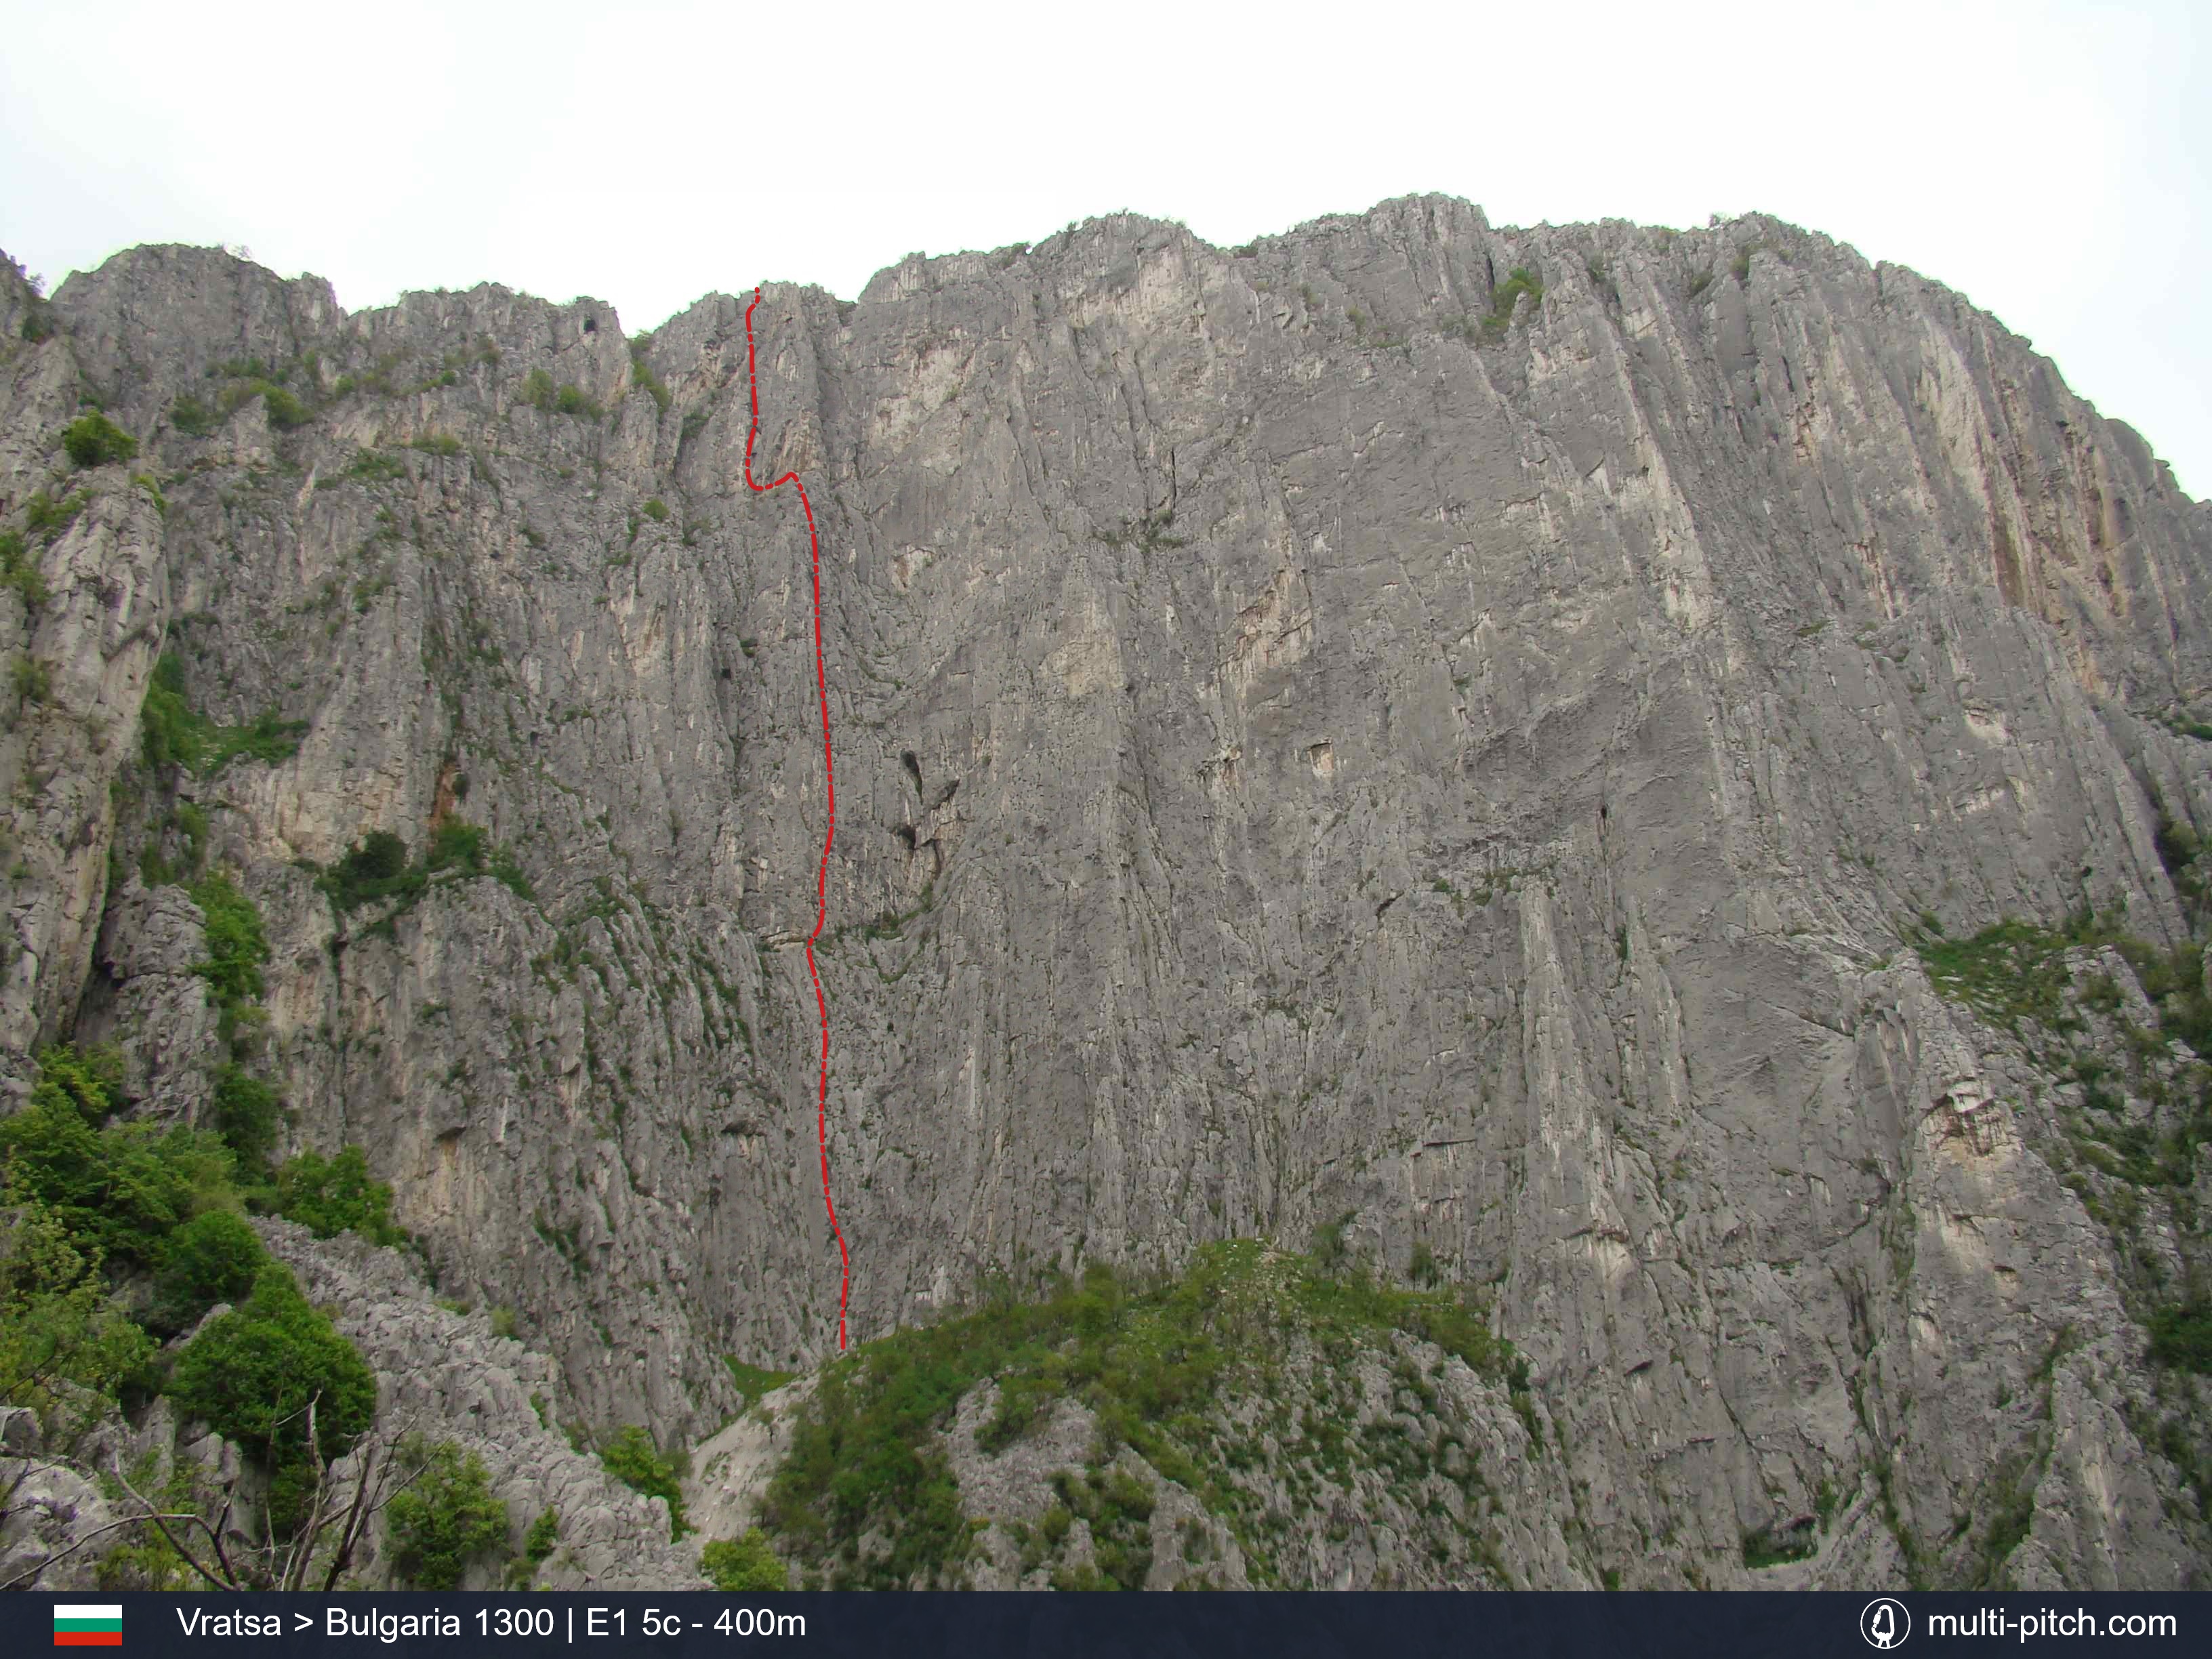 multi-pitch rock climbing on vratsa's main face via Bulgaria 1300